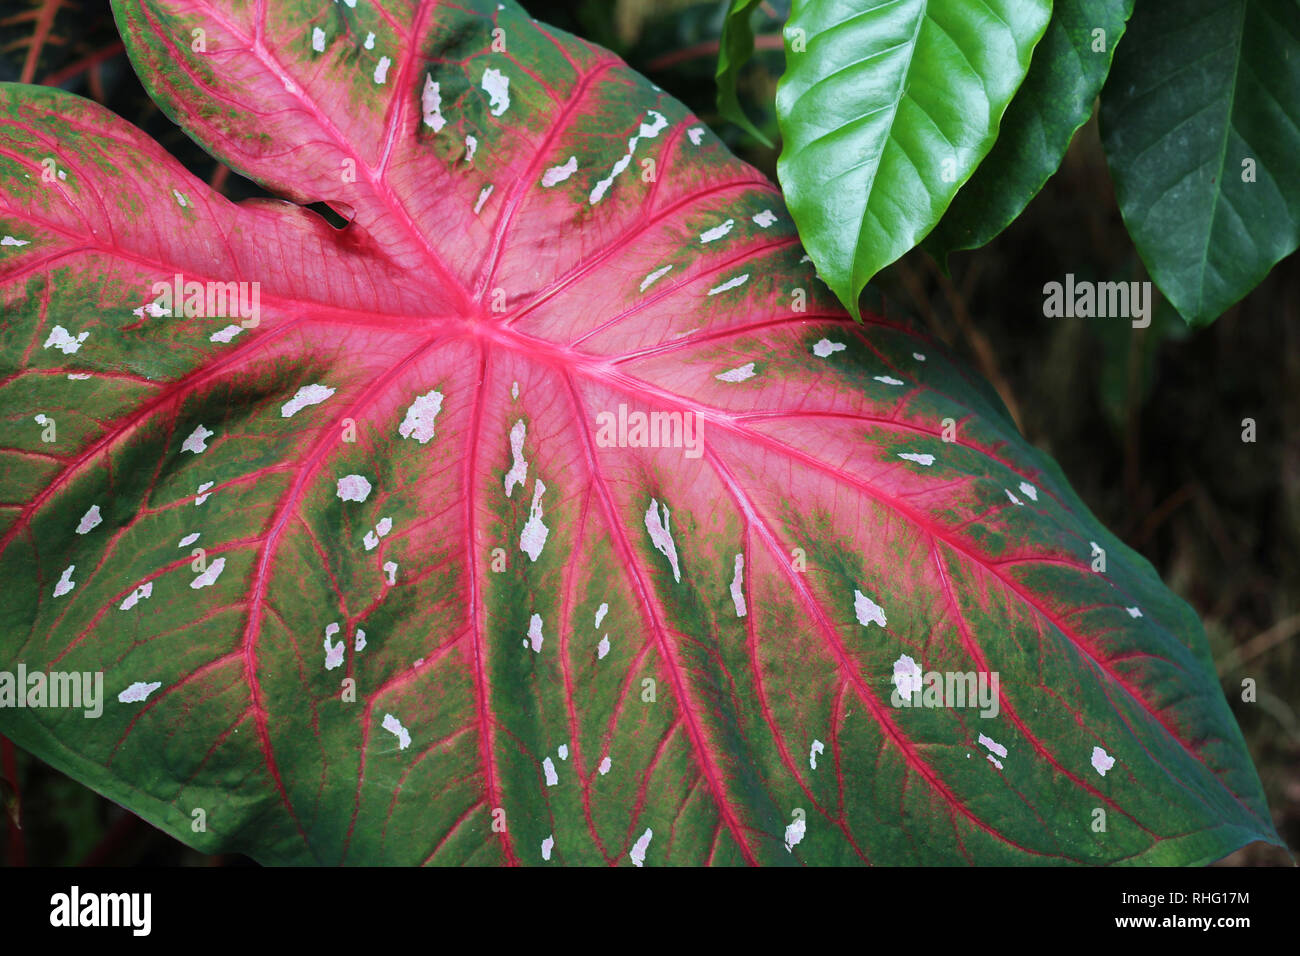 Close up of a Rosebud Caladium leaf Stock Photo